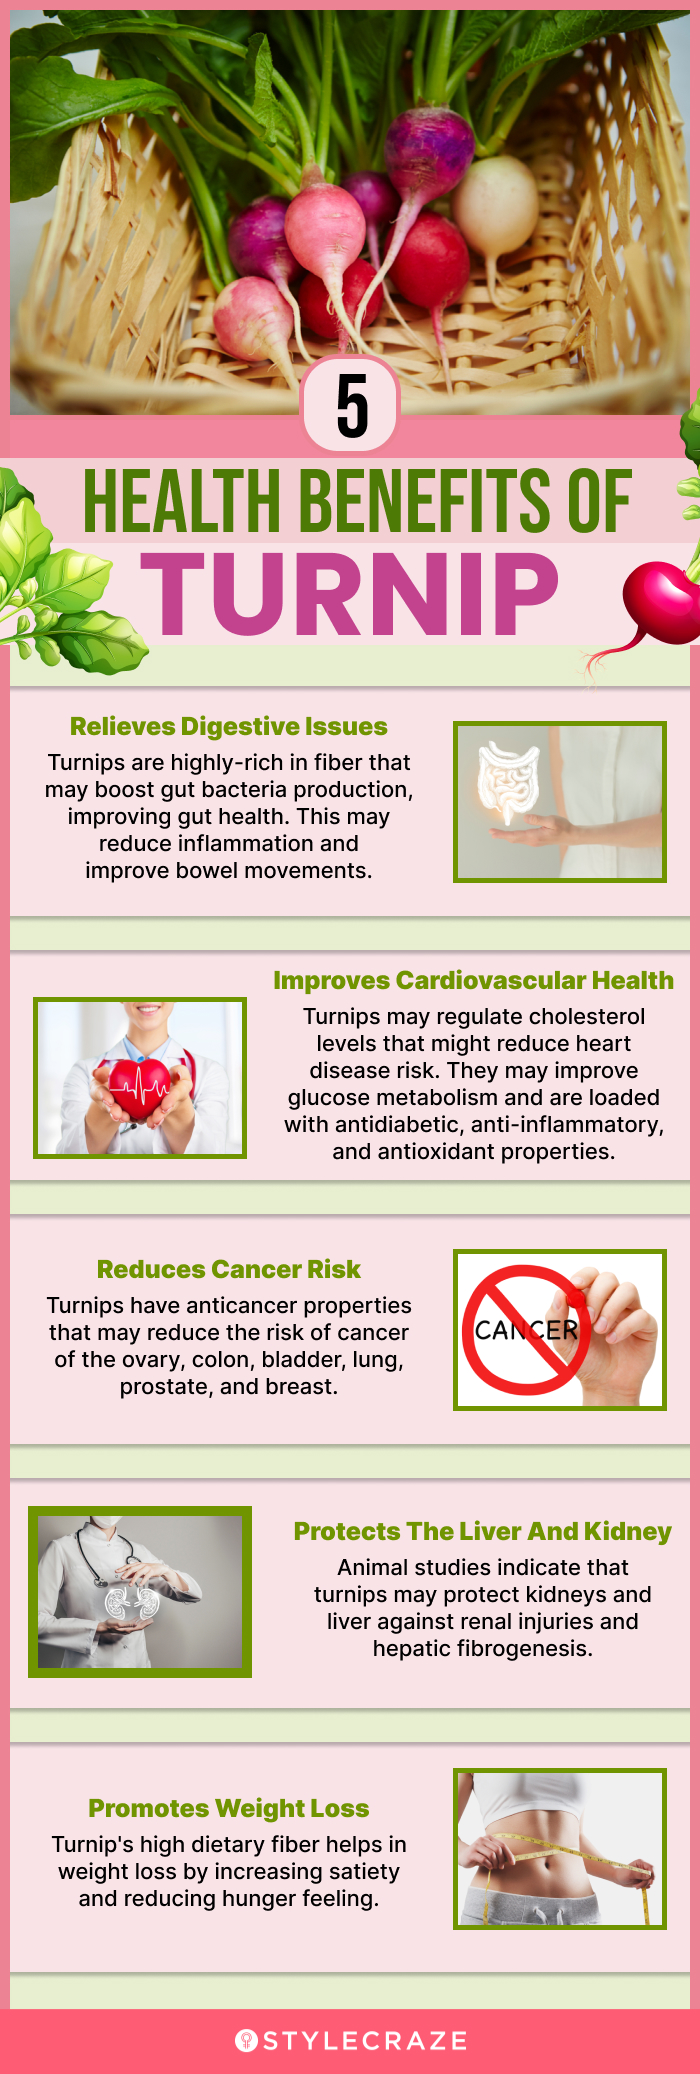 5 health benefits of turnip (infographic)